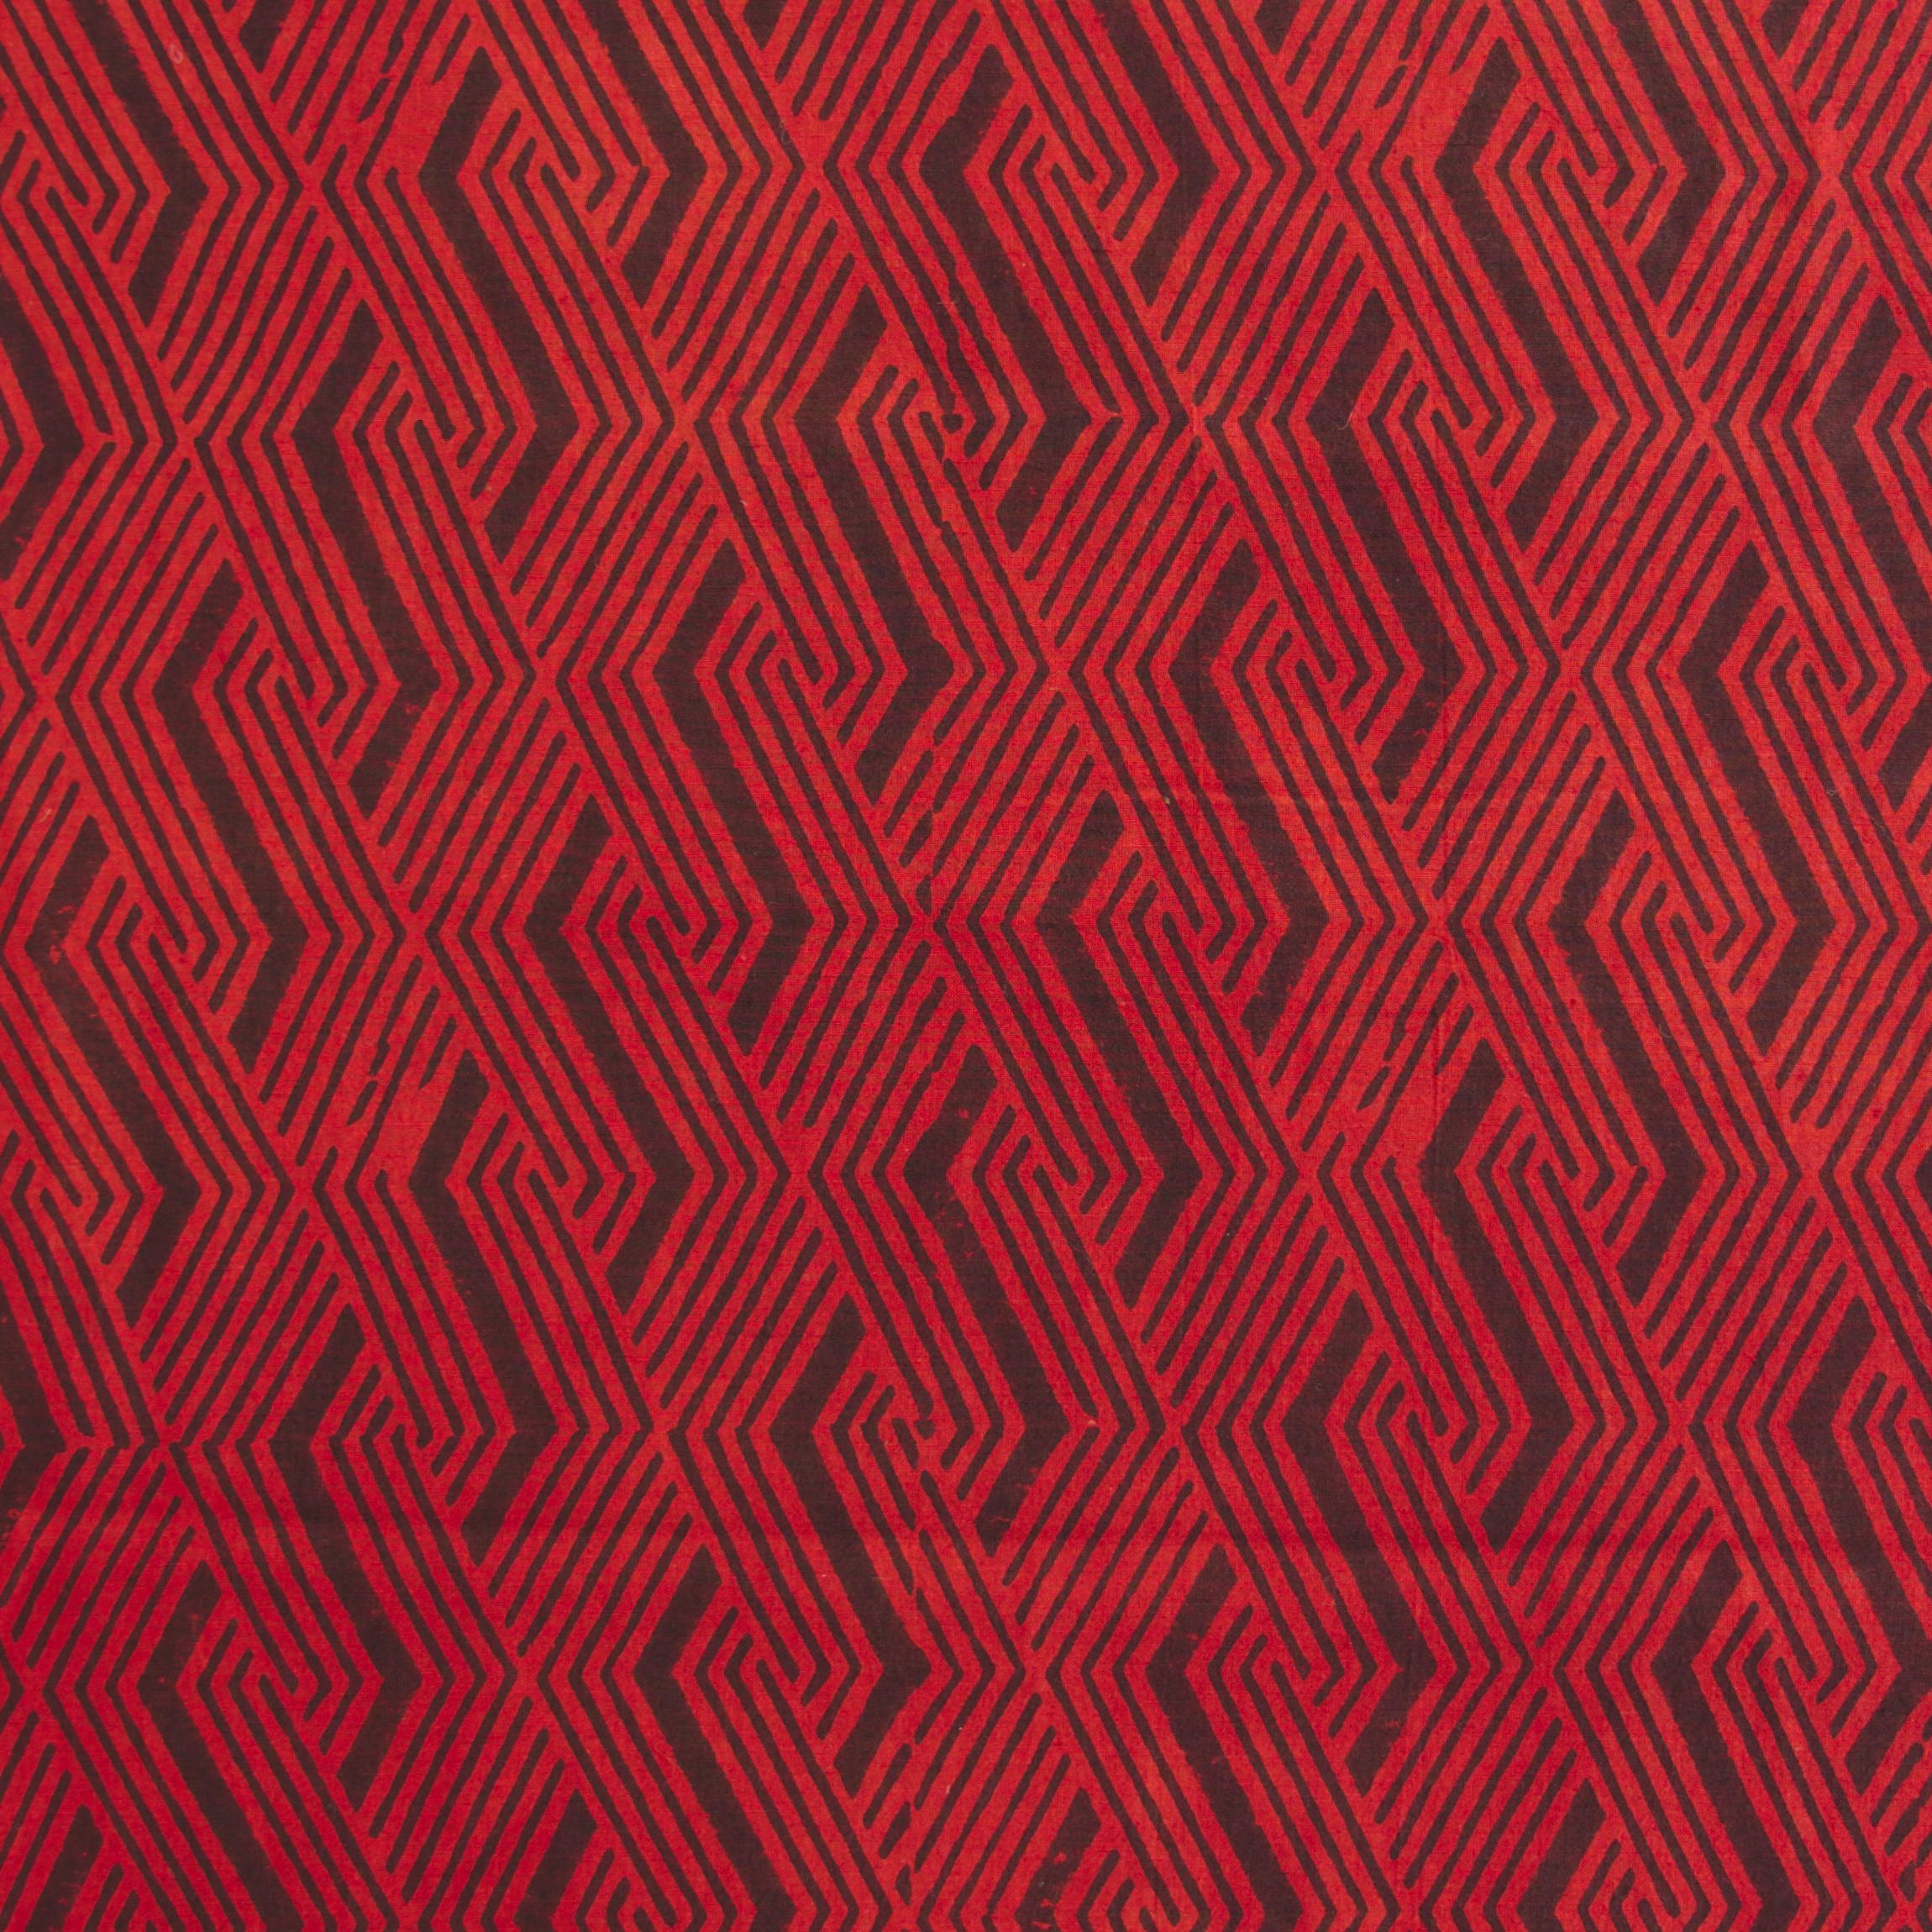 SIK26 - Indian Block-Printed Cotton Fabric - Brick & Mortar Design - Black Iron and Red Alizarin Dye - Flat